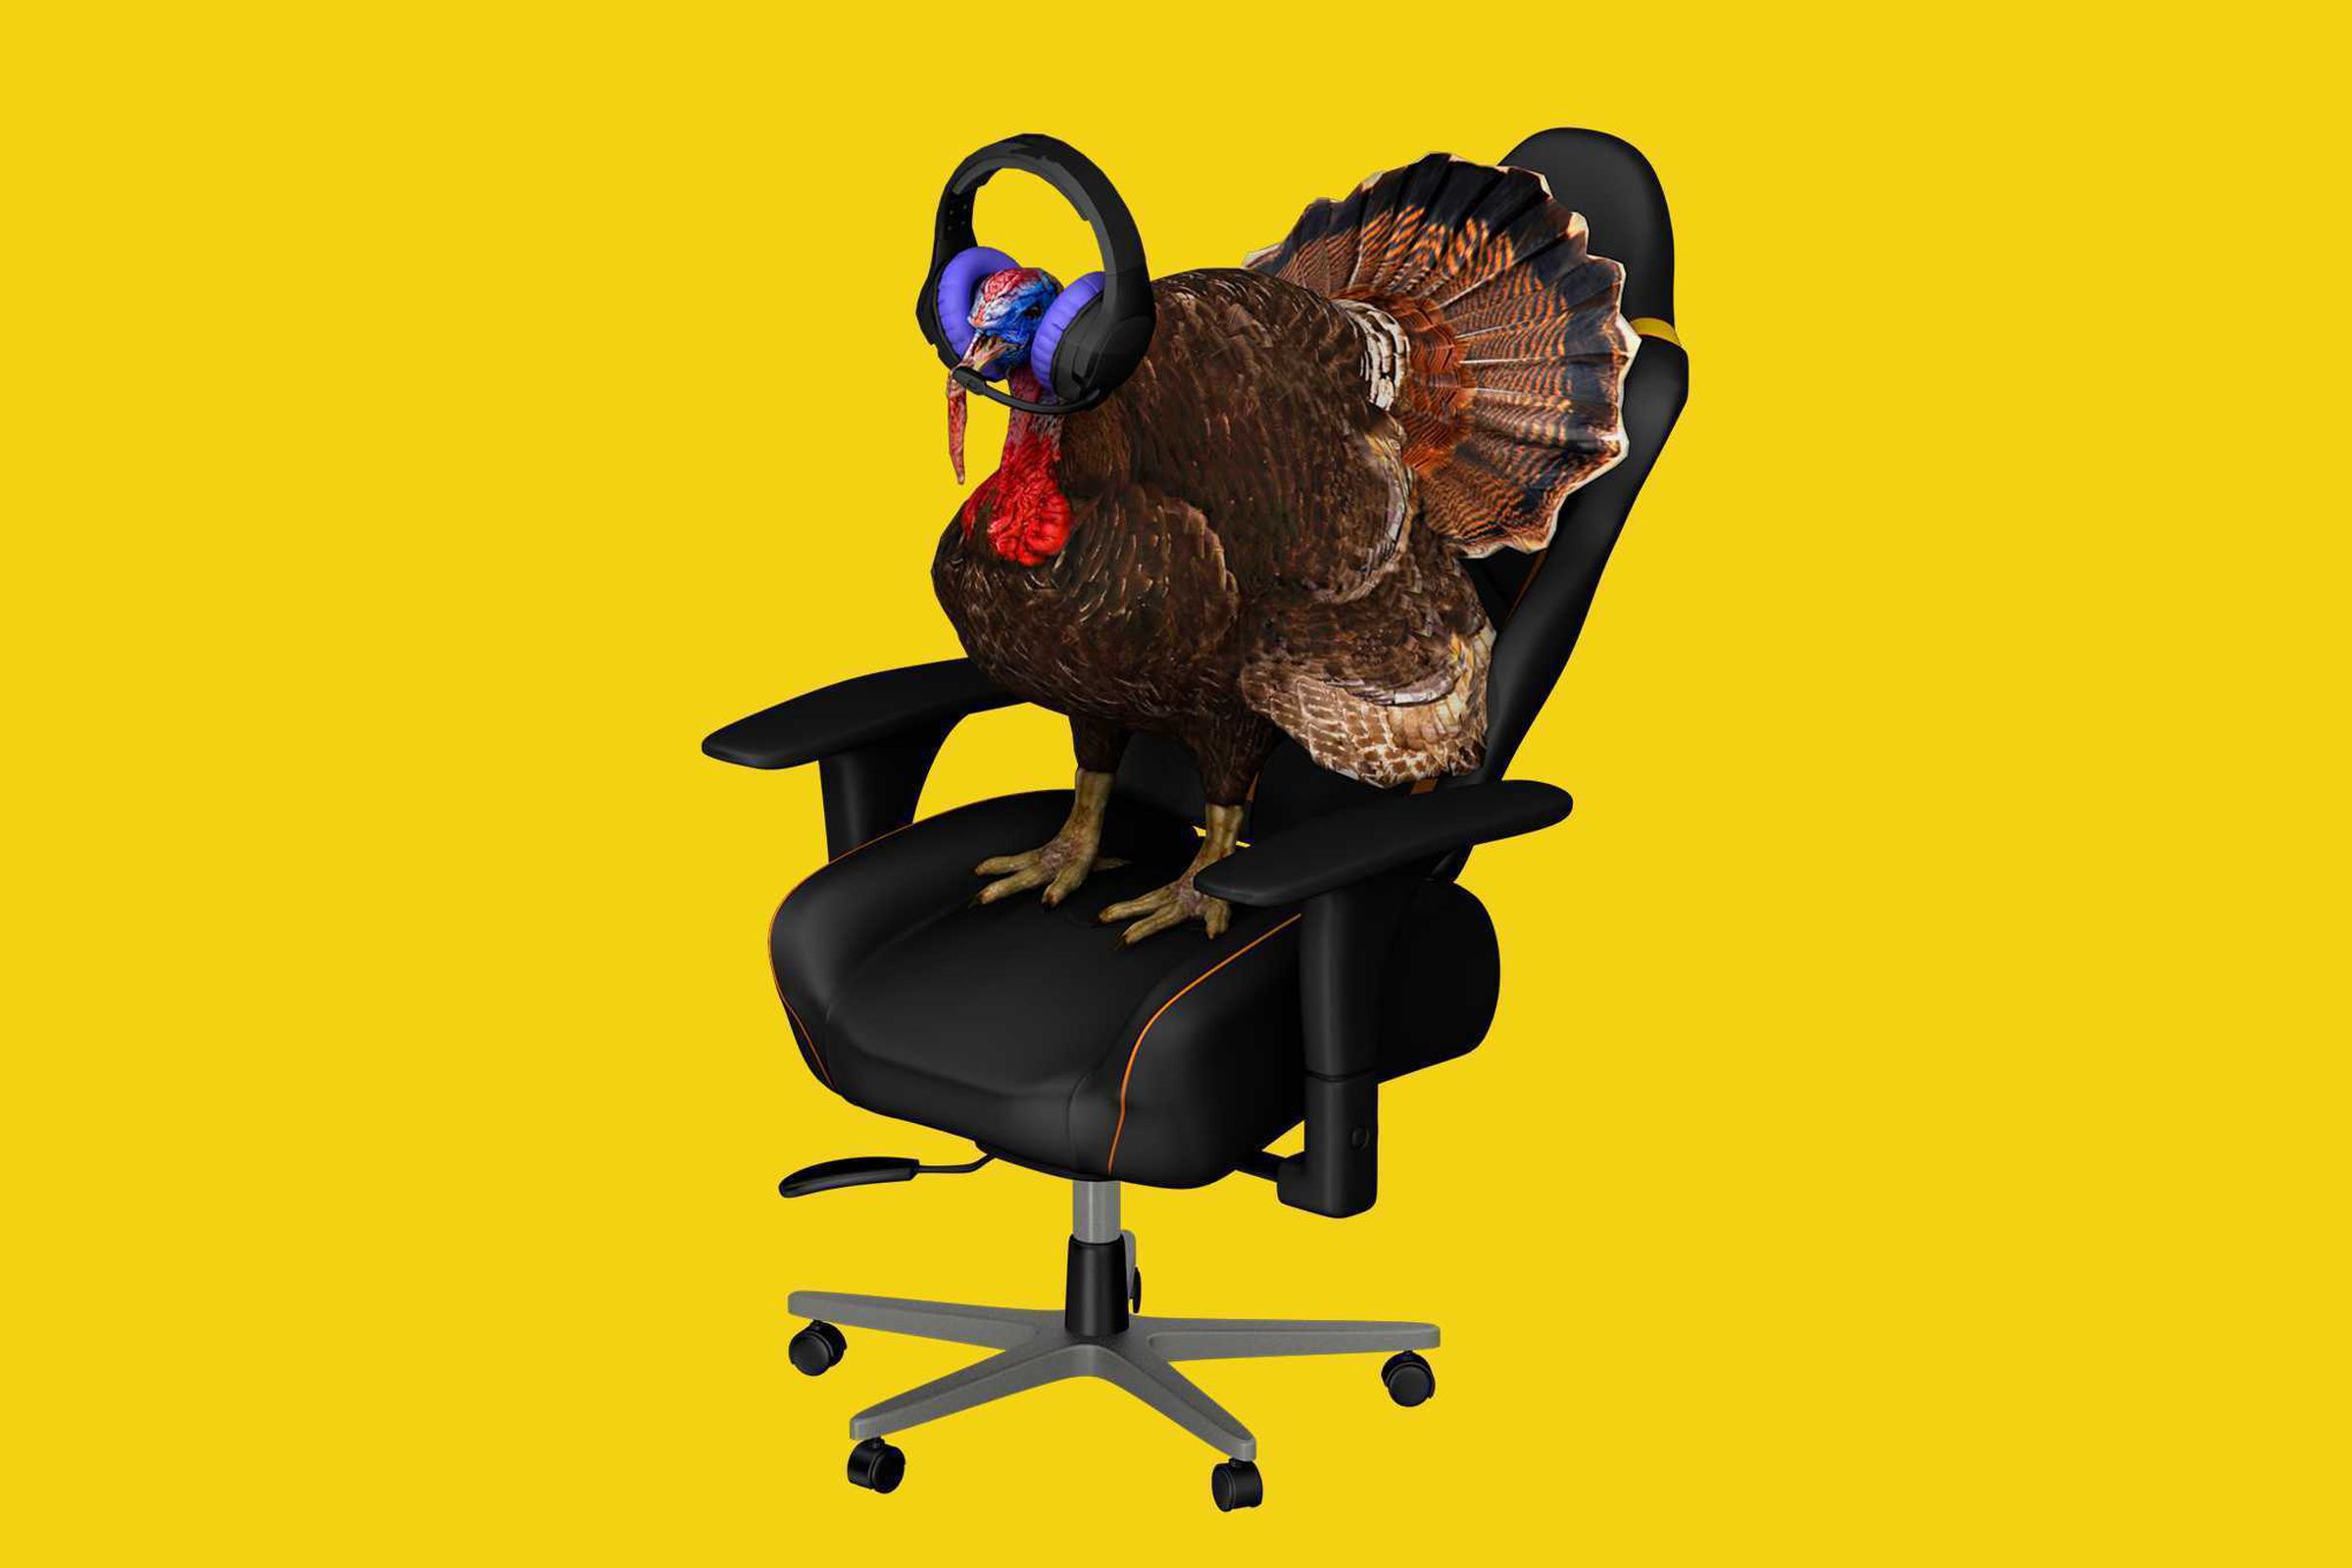 An illustration of a gamer turkey wearing big headphones.